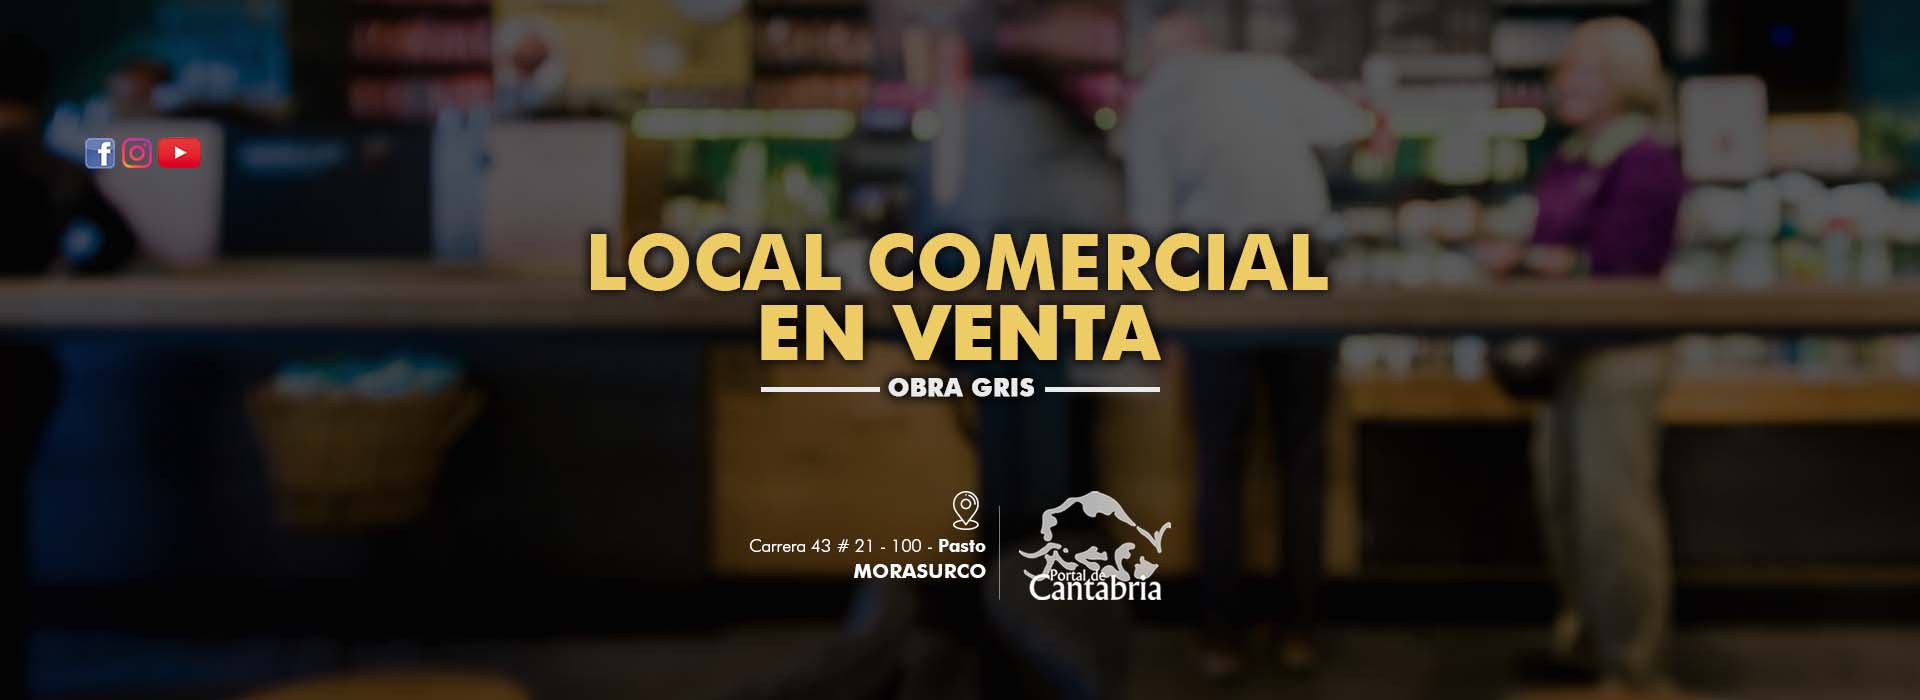 Portal de Cantabria - Local Comercial